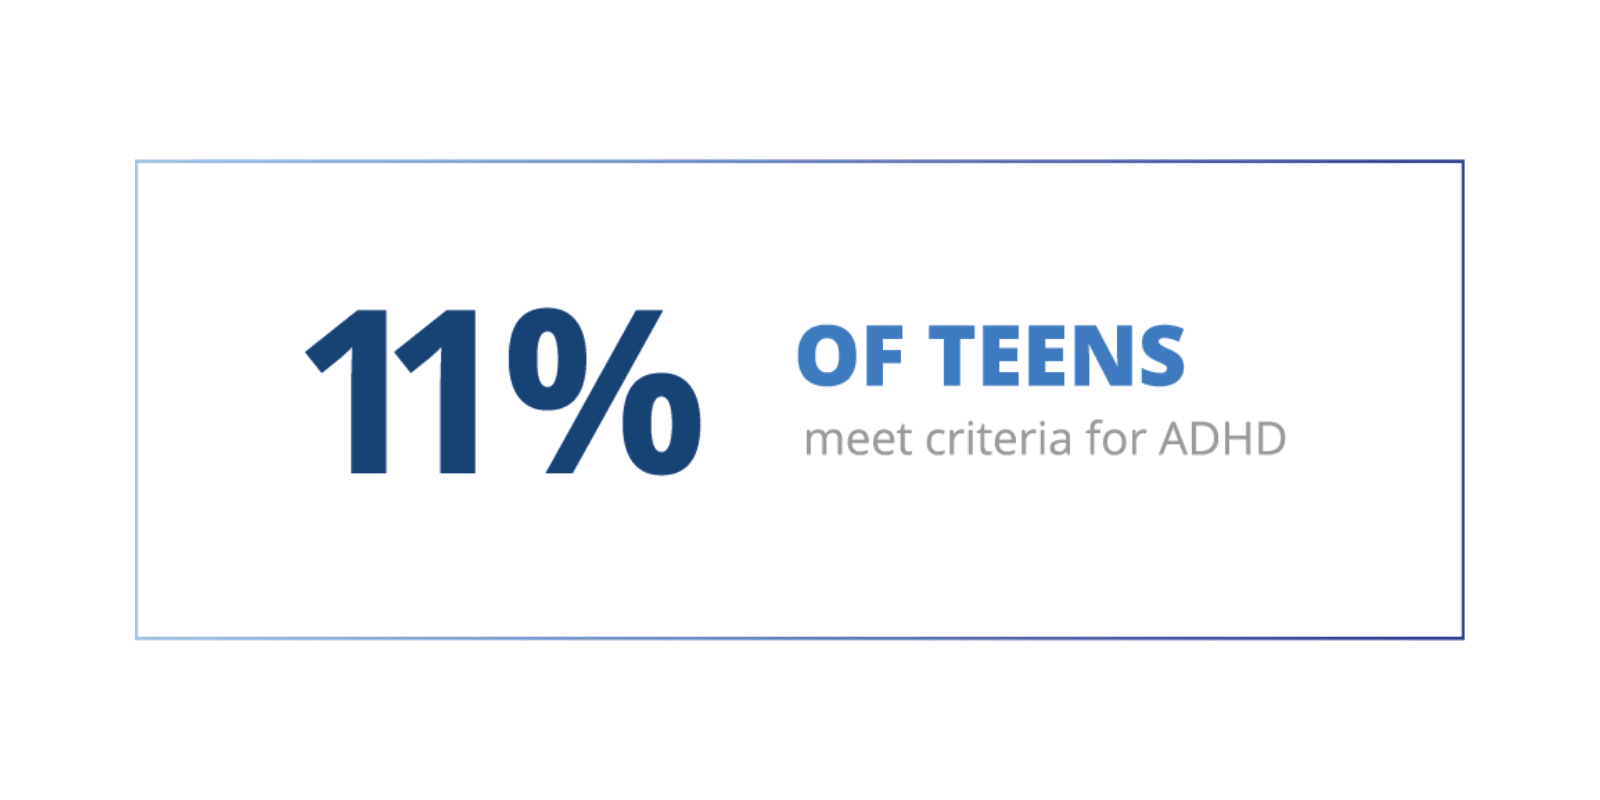 11% of teens meet criteria for ADHD